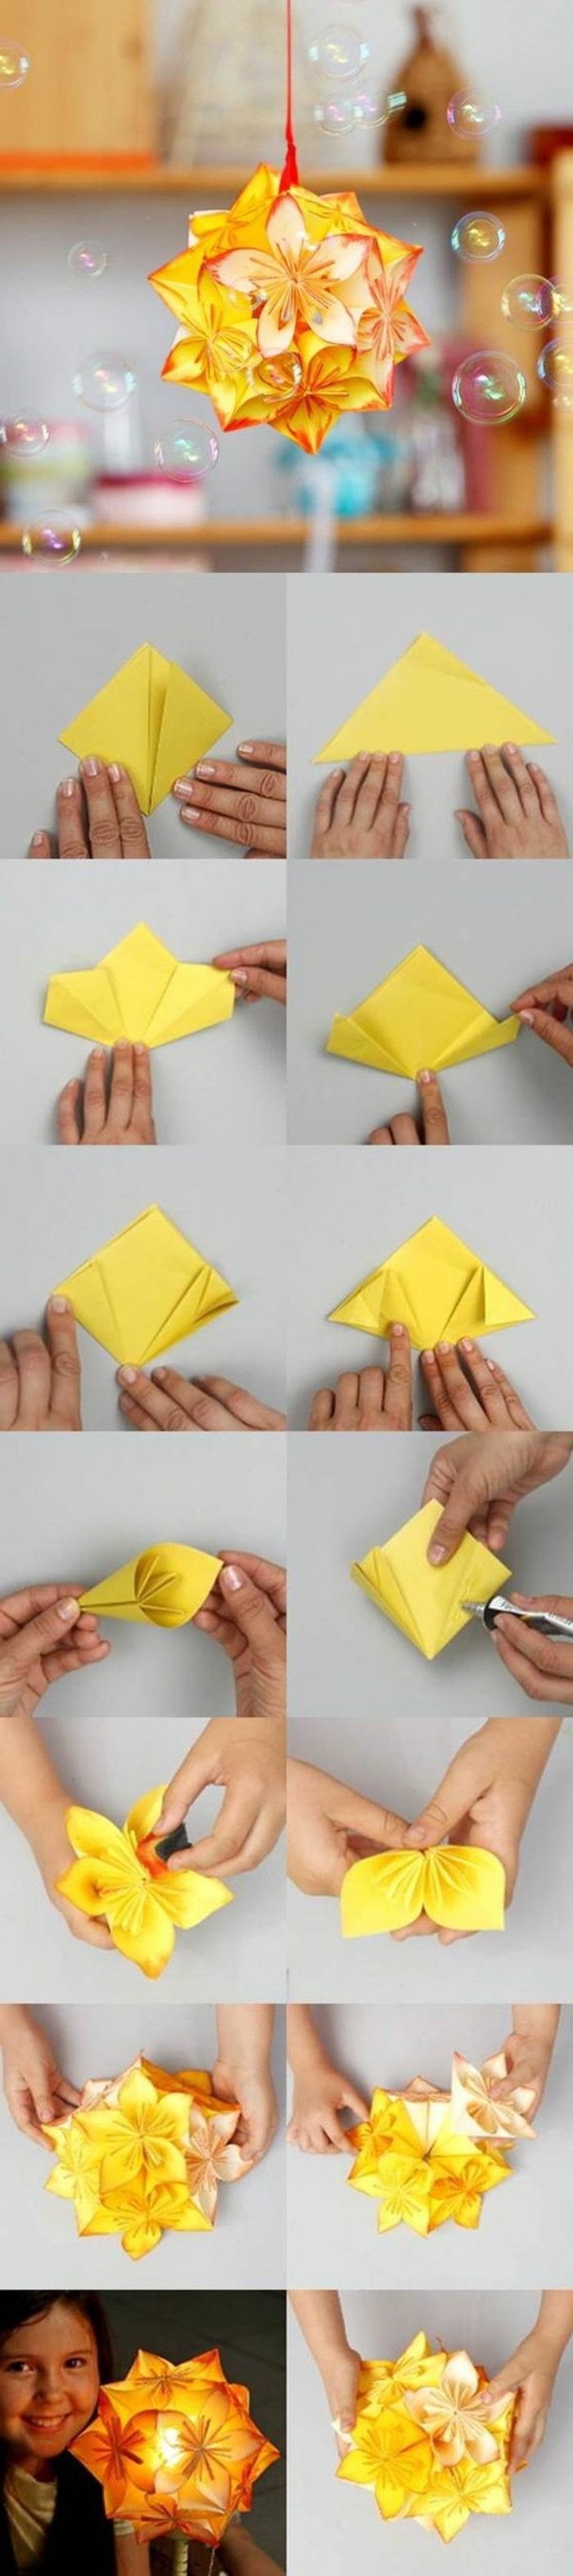 origami rid instrucțiuni origami pliere tehnica pliere origami foldingmanuals hartie